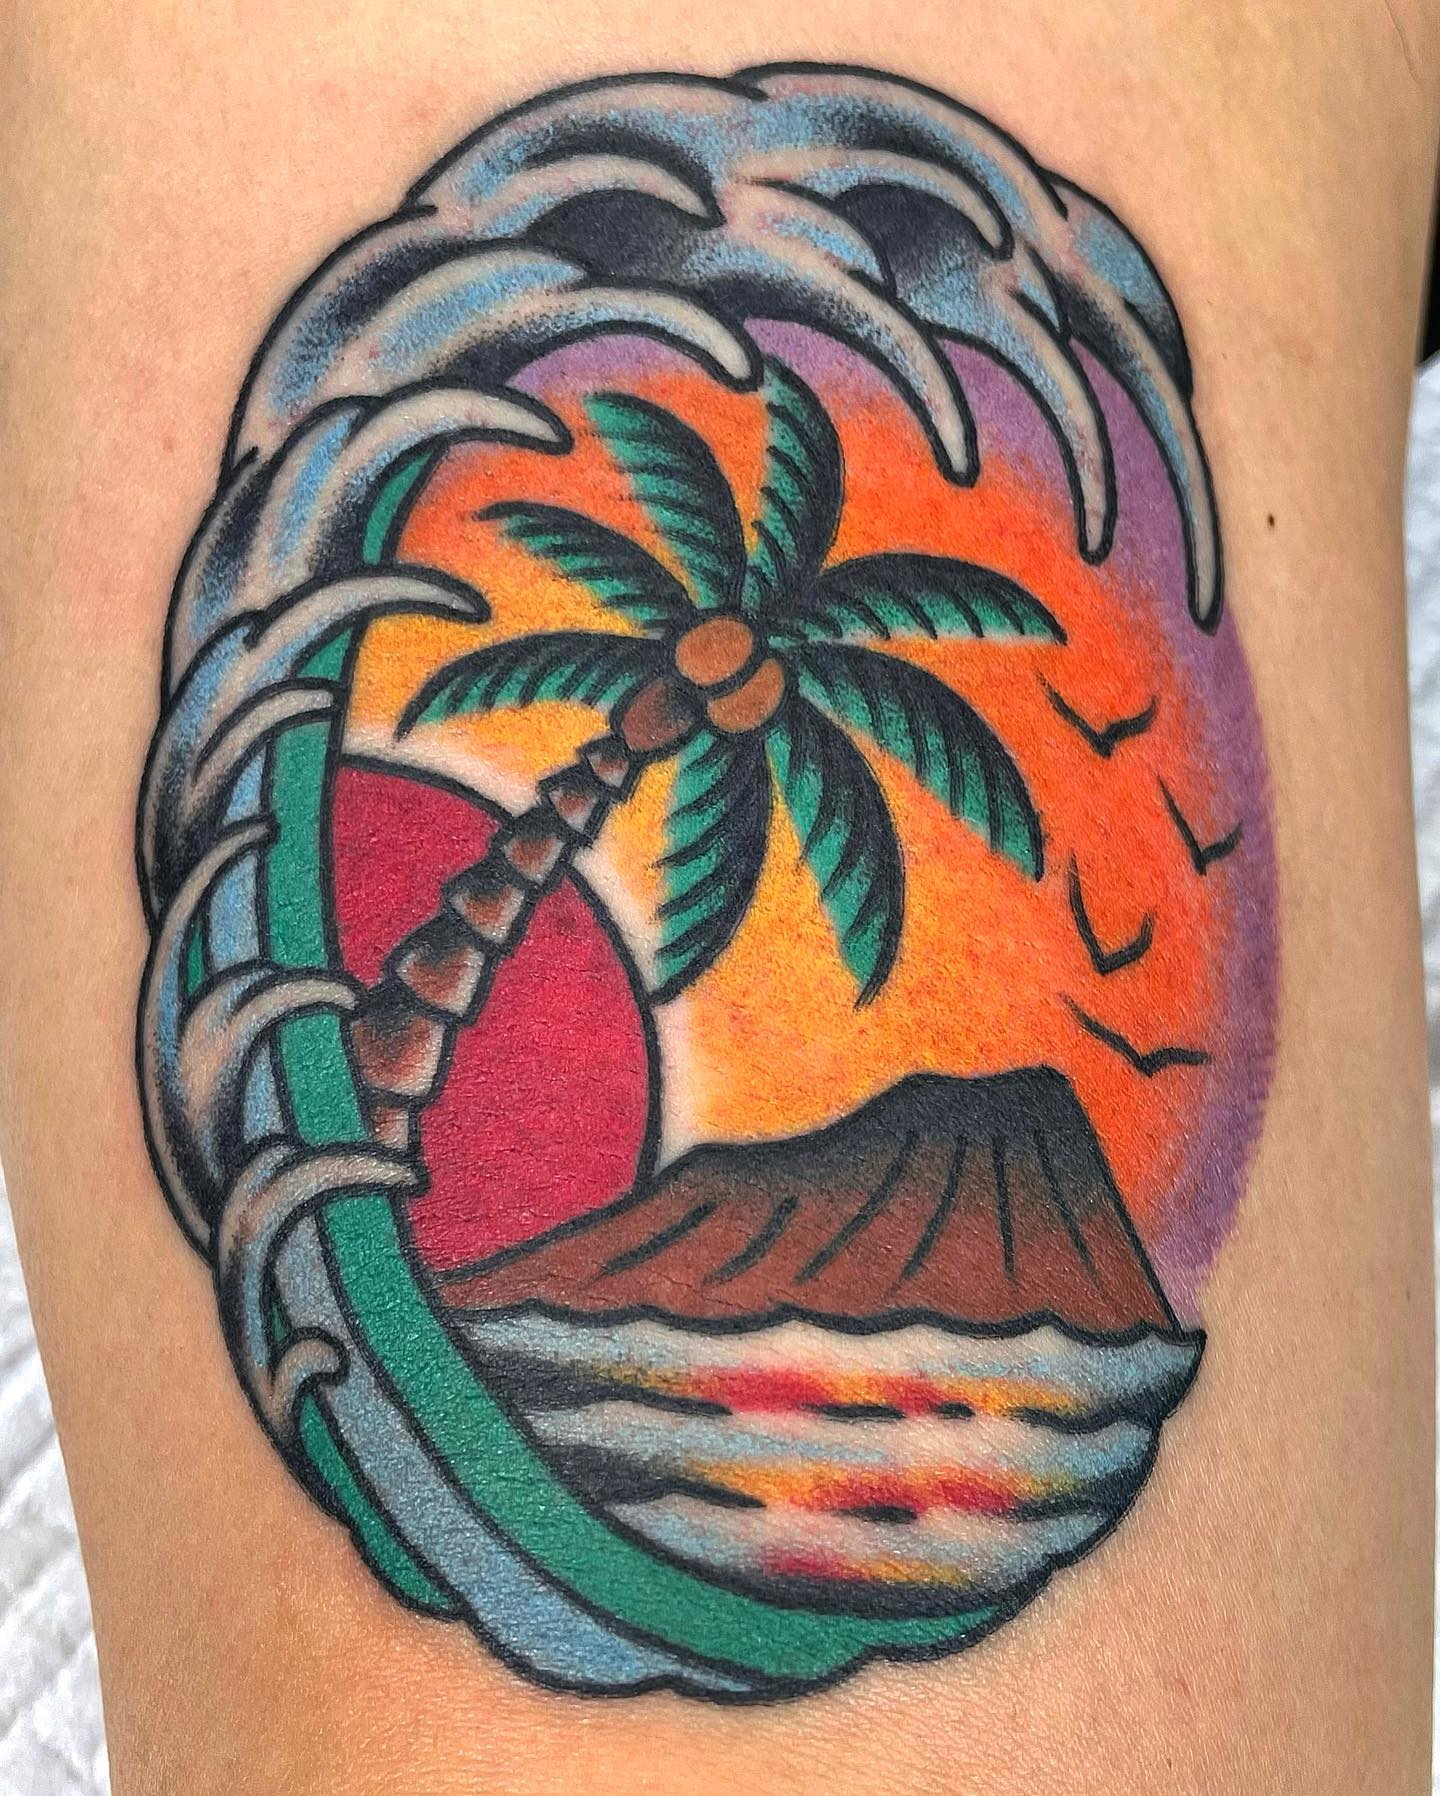 23 Harmonious Palm Tree Tattoos and Symbolism Behind Them